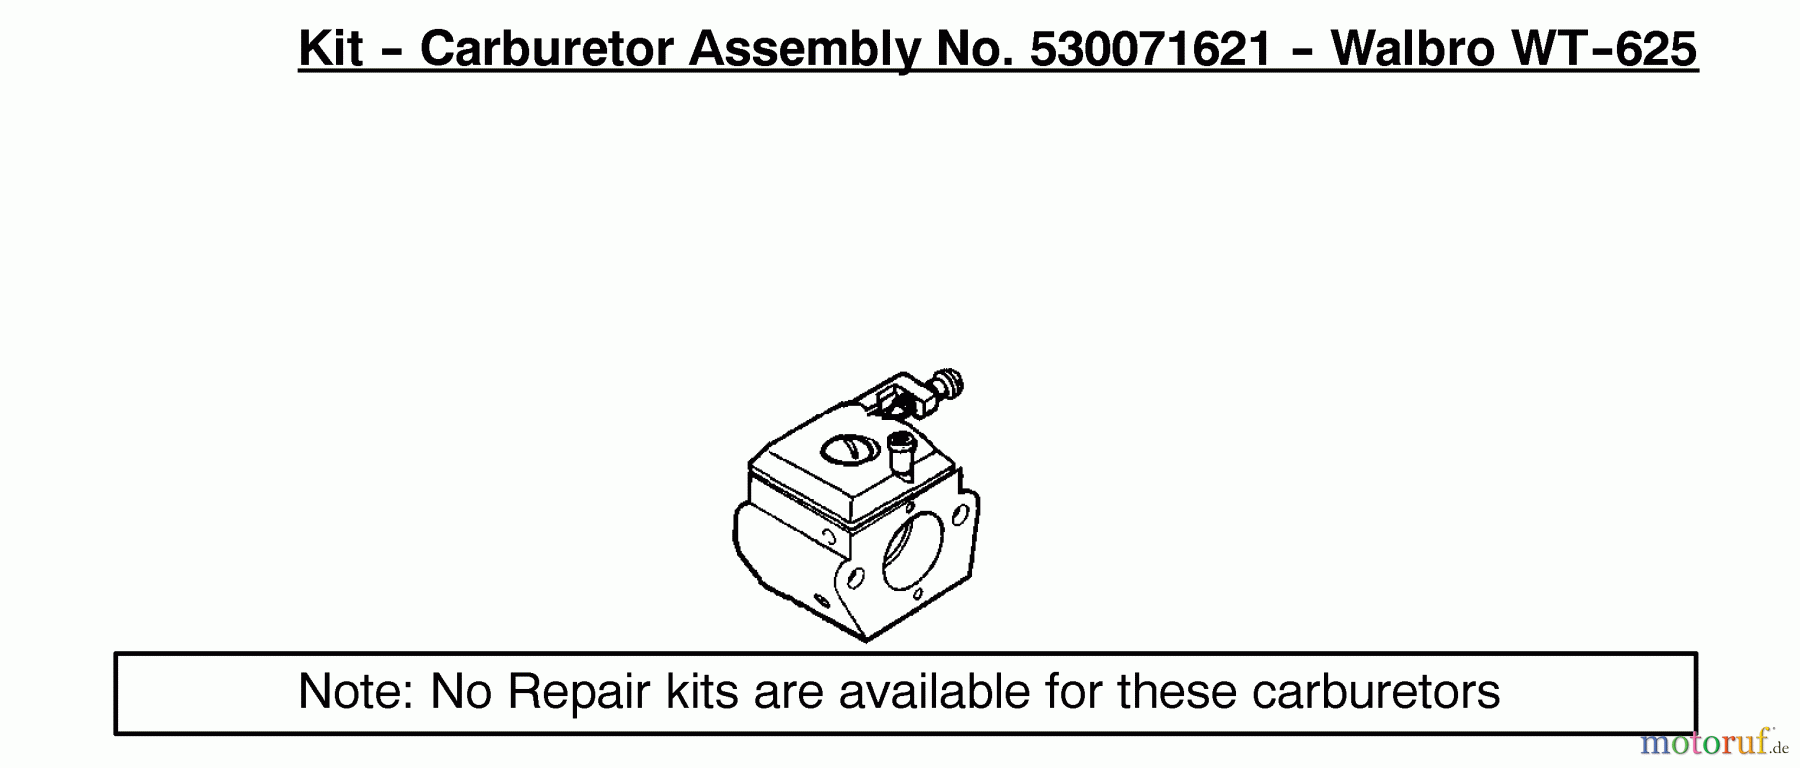  Poulan / Weed Eater Motorsägen 2550LE (Type 2) - Poulan Woodmaster Chainsaw Carburetor Assembly Kit (WT-625) 530071621